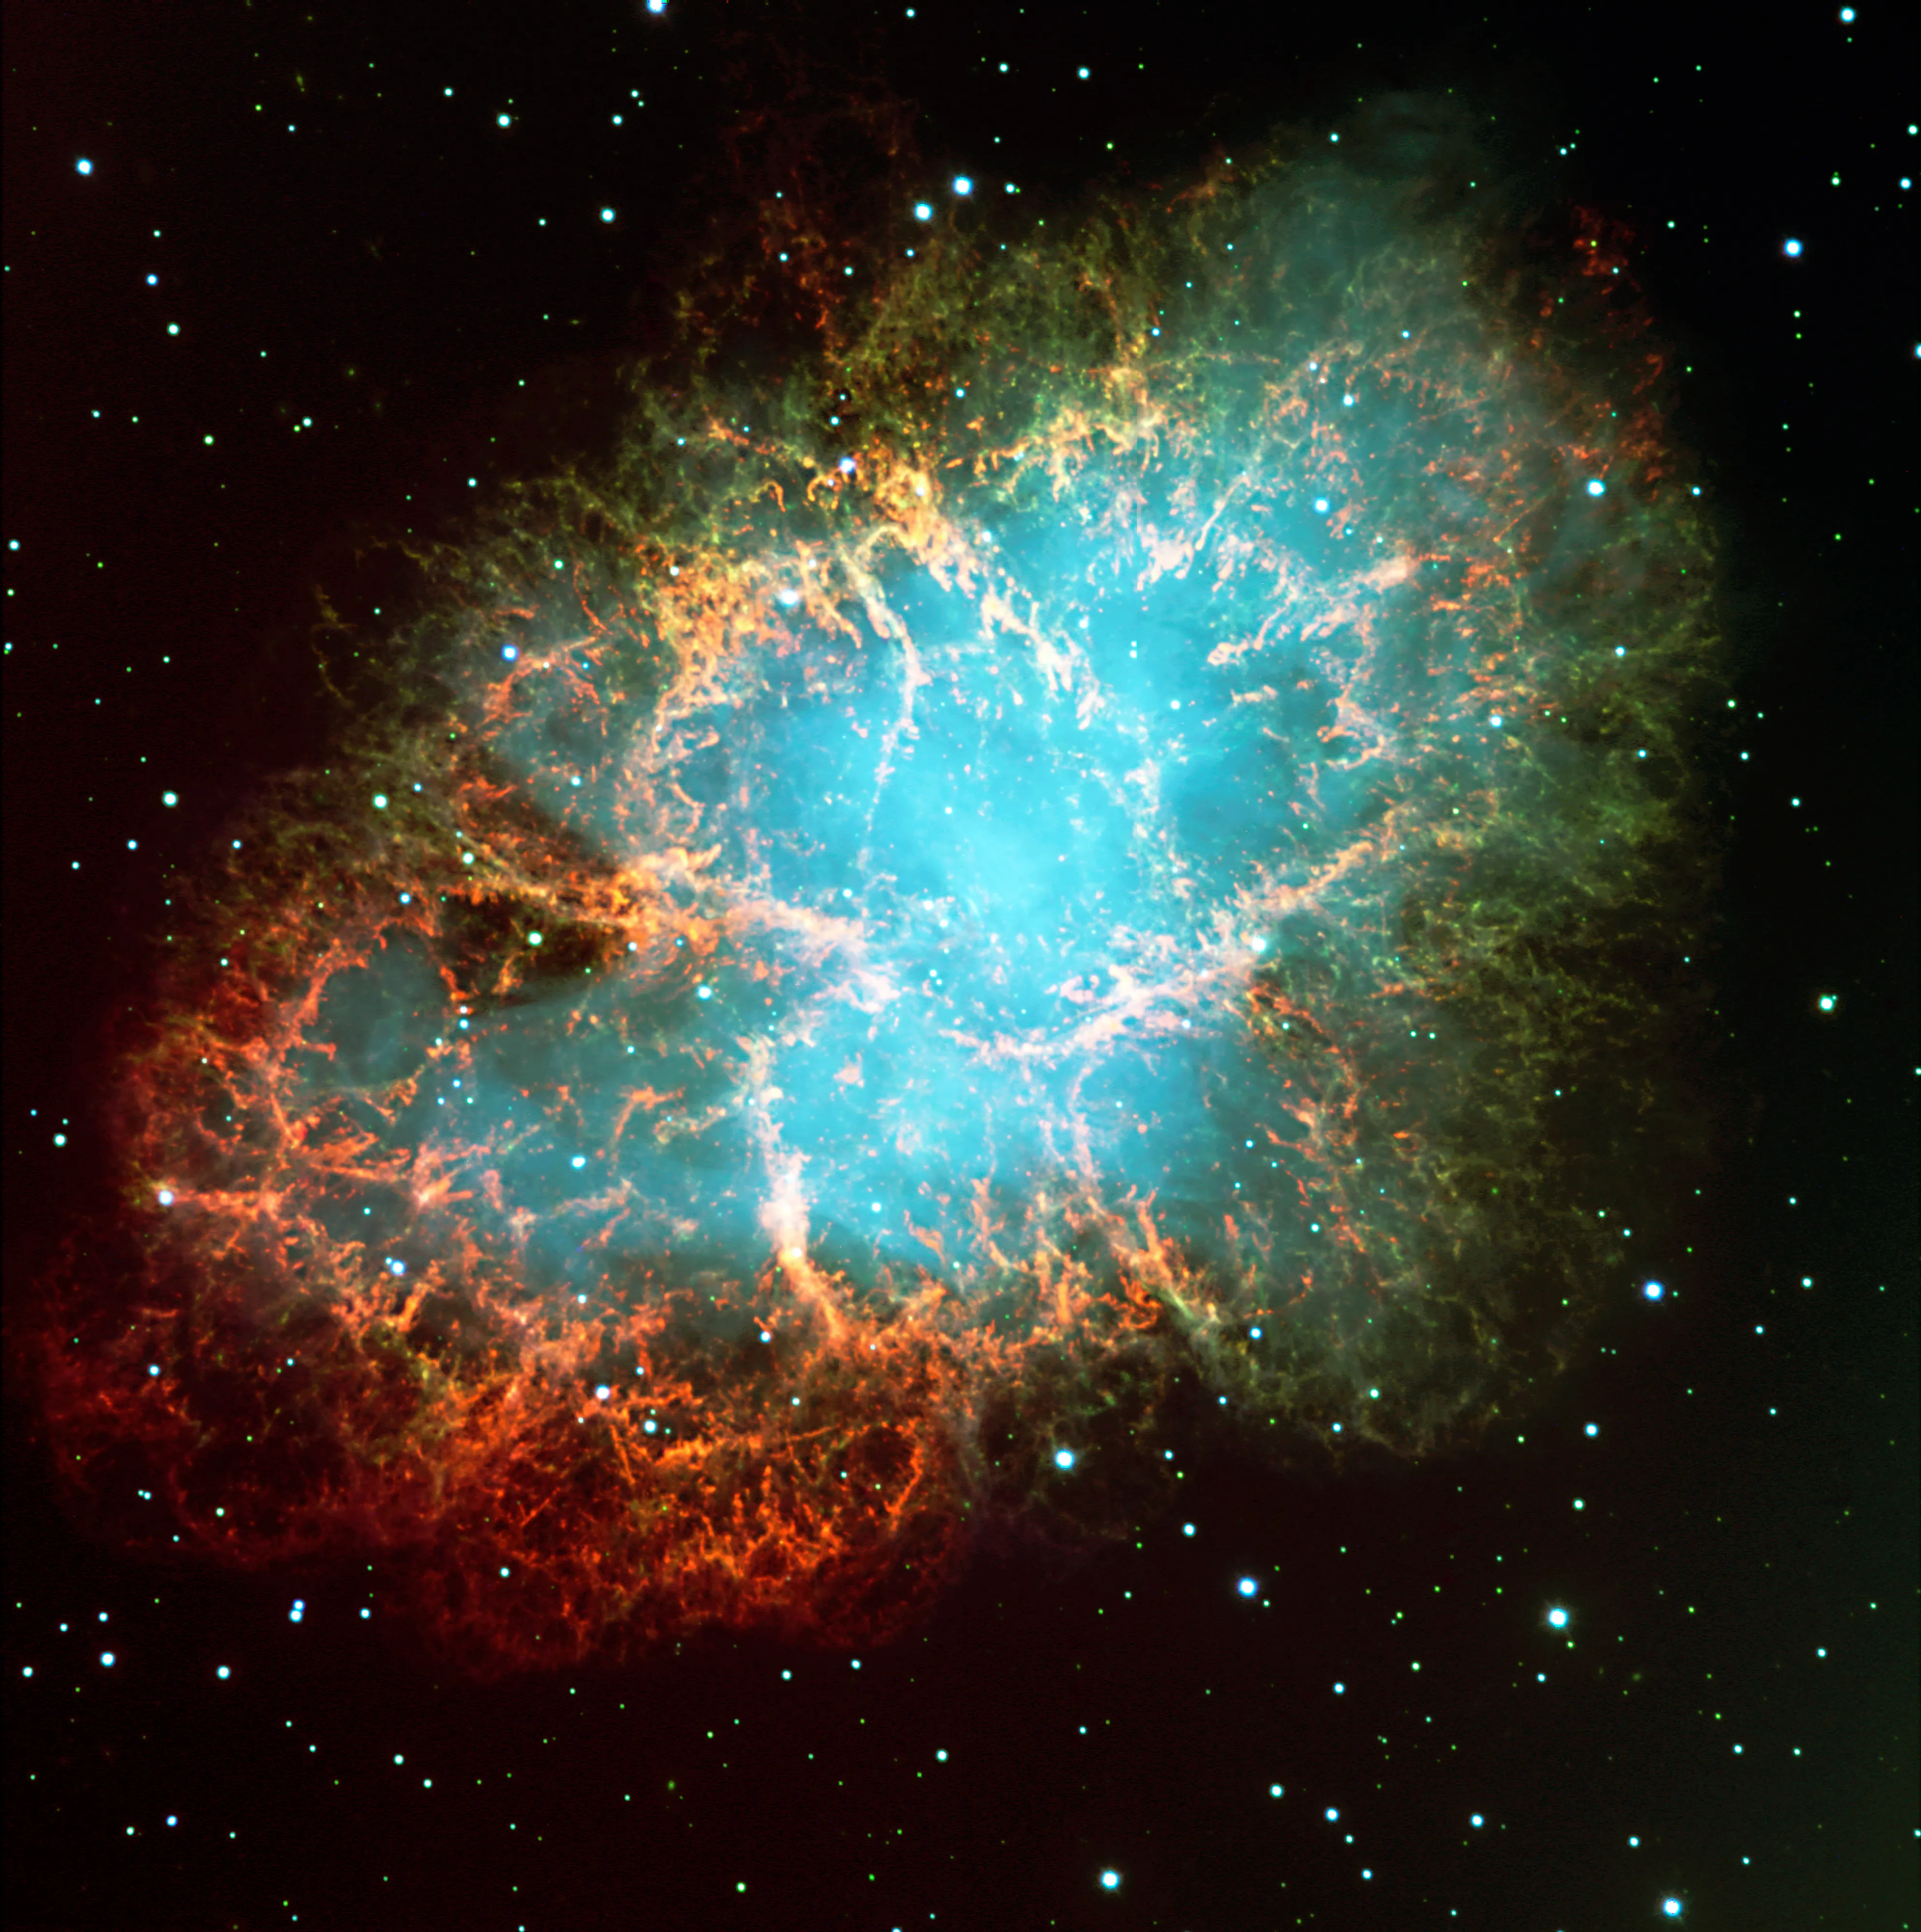 "Crab Nebula - A Supernova remnant"